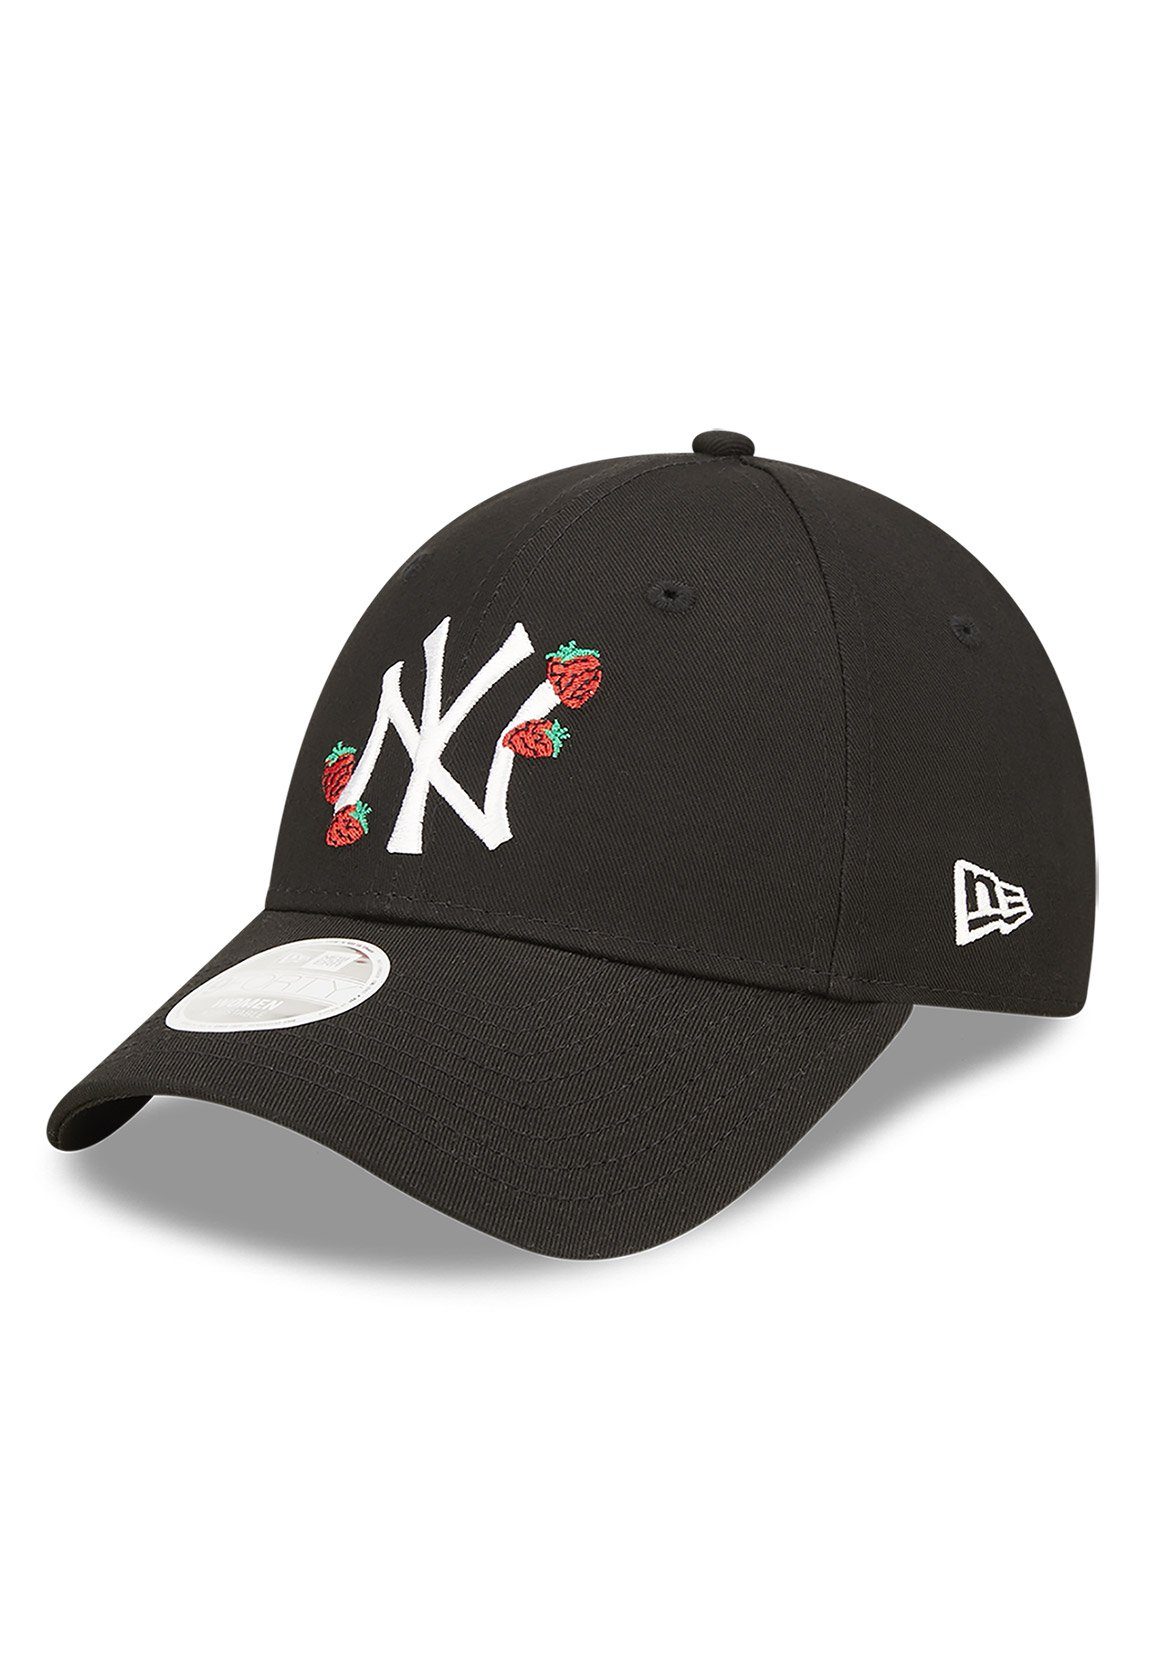 Wmns YANKEES New Adjustable Damen Baseball Cap Cap Era Era NY New Strawberry 9Forty